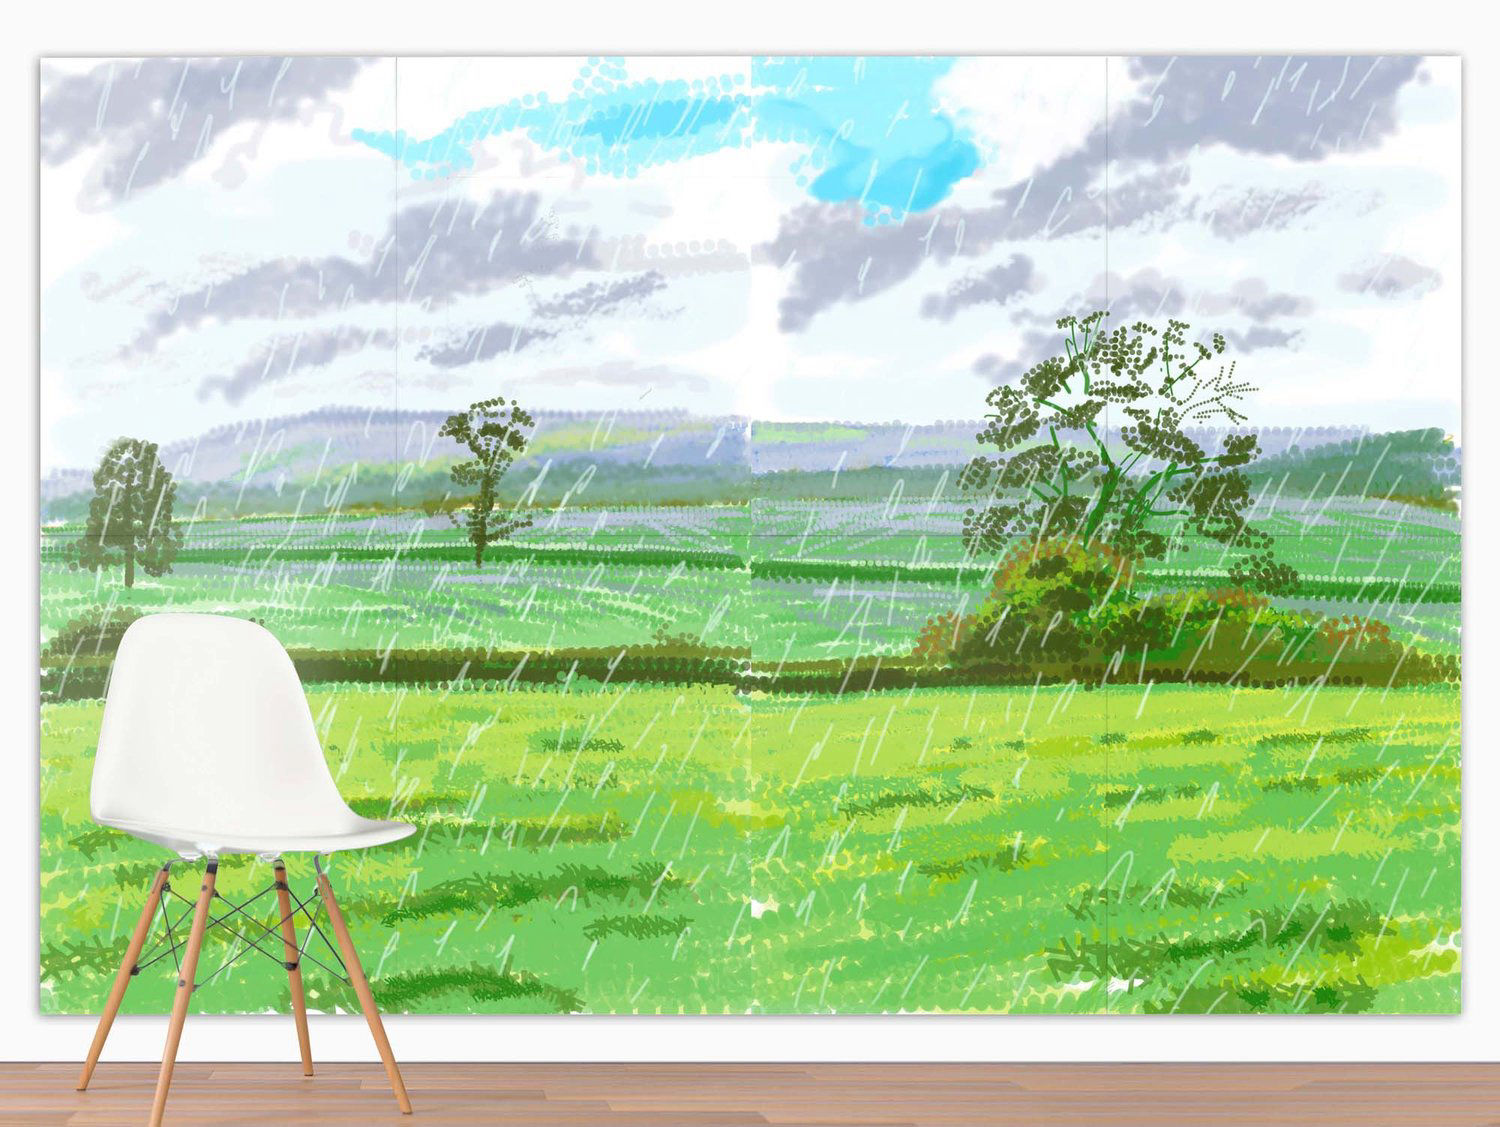 Andy Maitland, iPad artist, iPad drawings made across two iPad canvases, Flanchford Farm, Surrey, UK, 2021